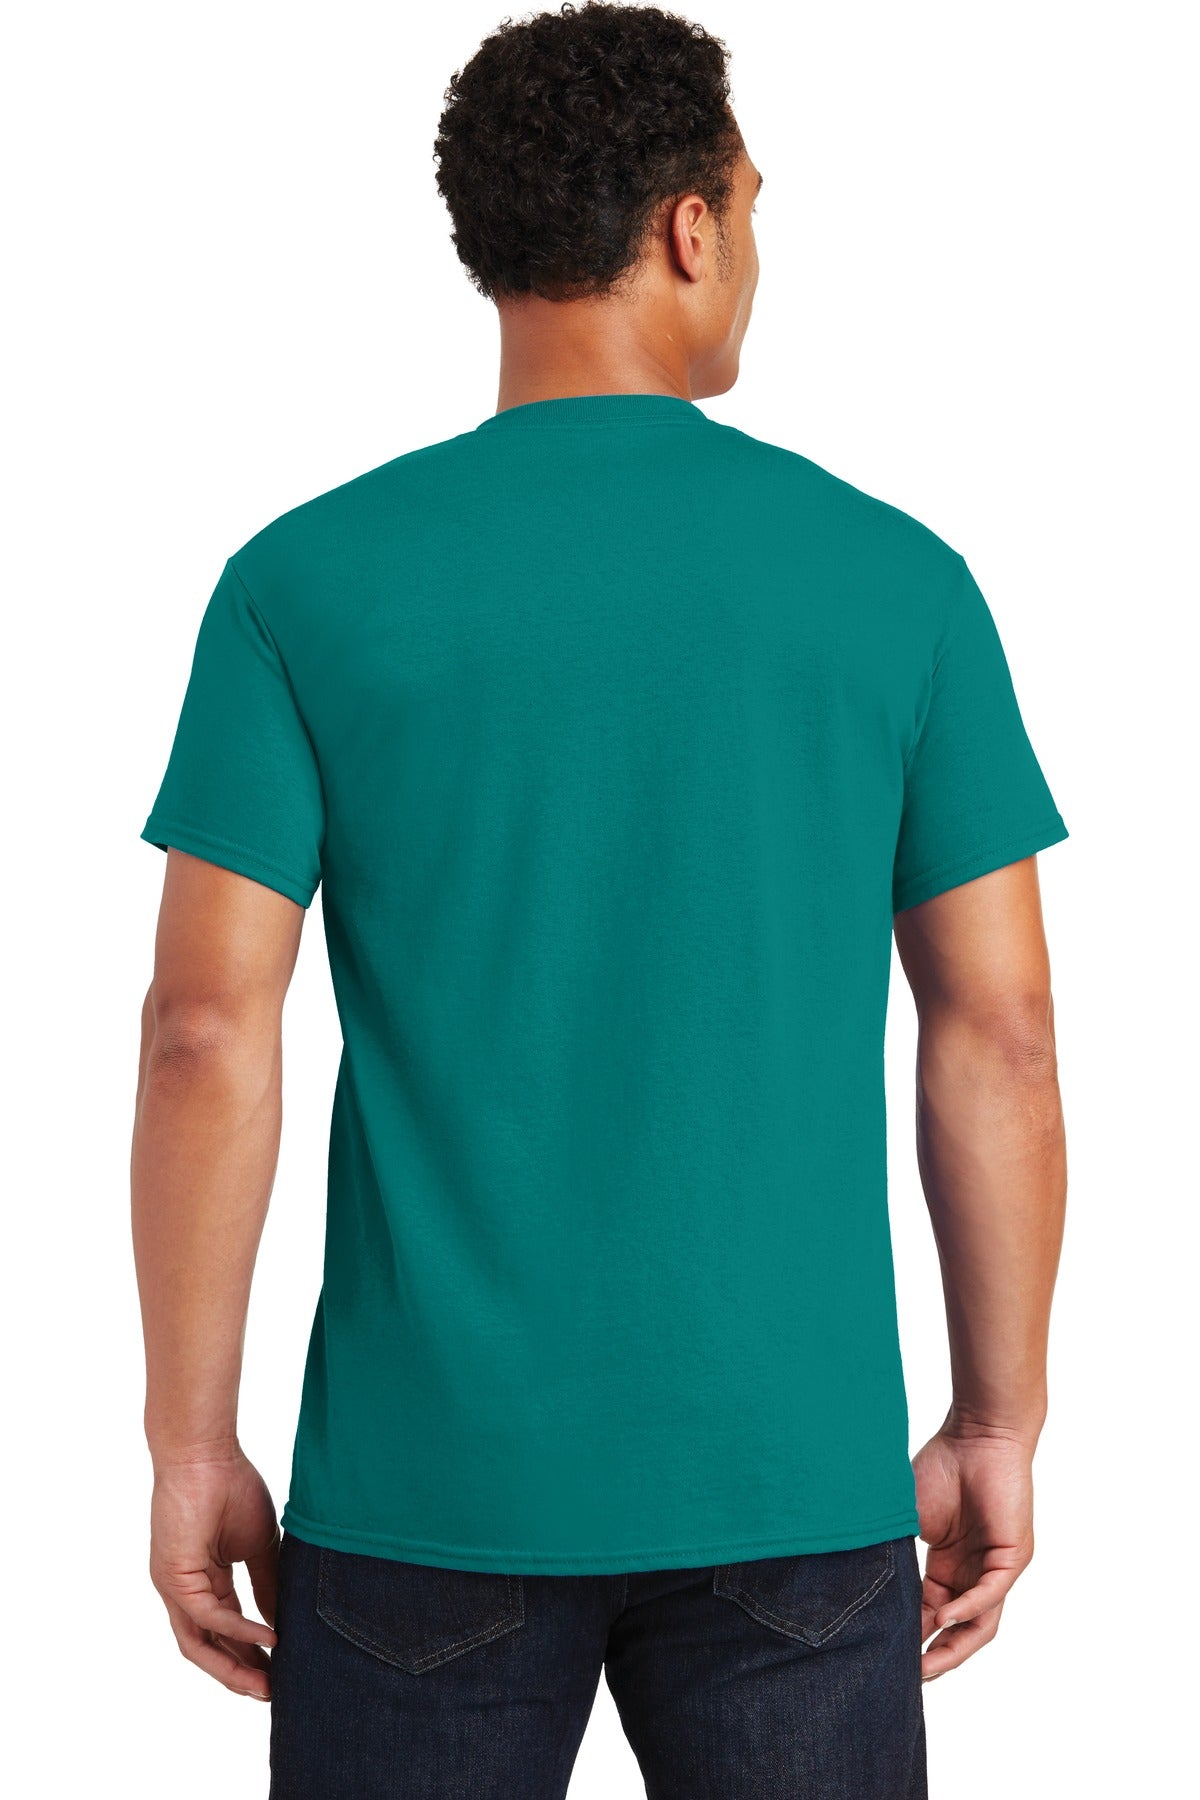 Gildan - Ultra Cotton 100% US Cotton T-Shirt. 2000 - Jade Dome